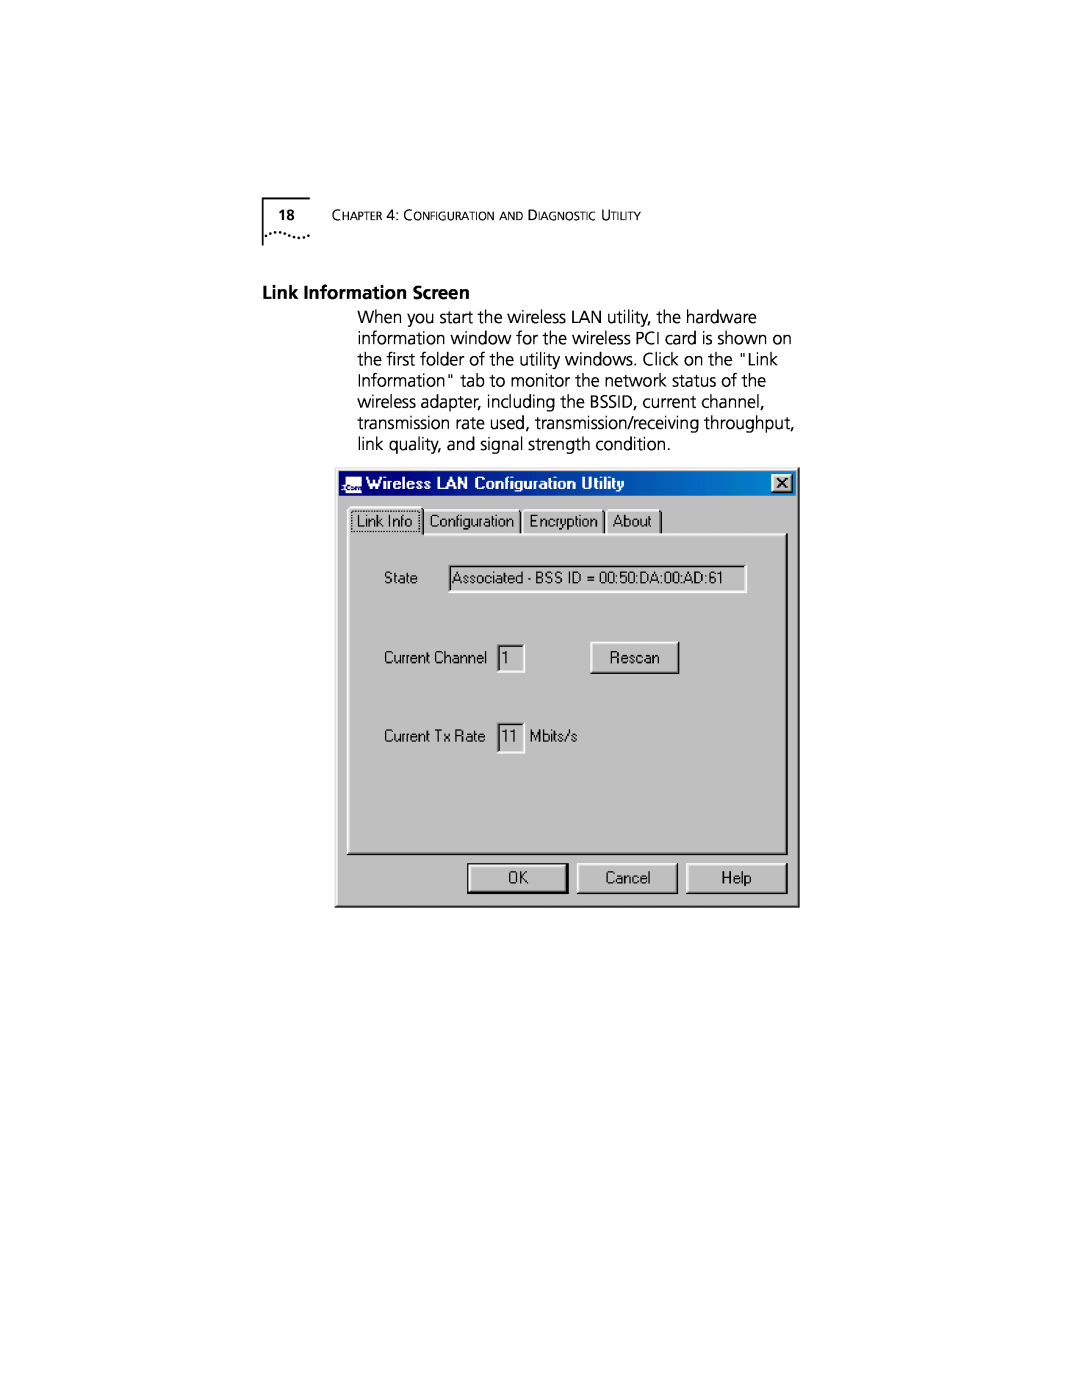 3Com 3CRWE777A manual Link Information Screen, Configuration And Diagnostic Utility 